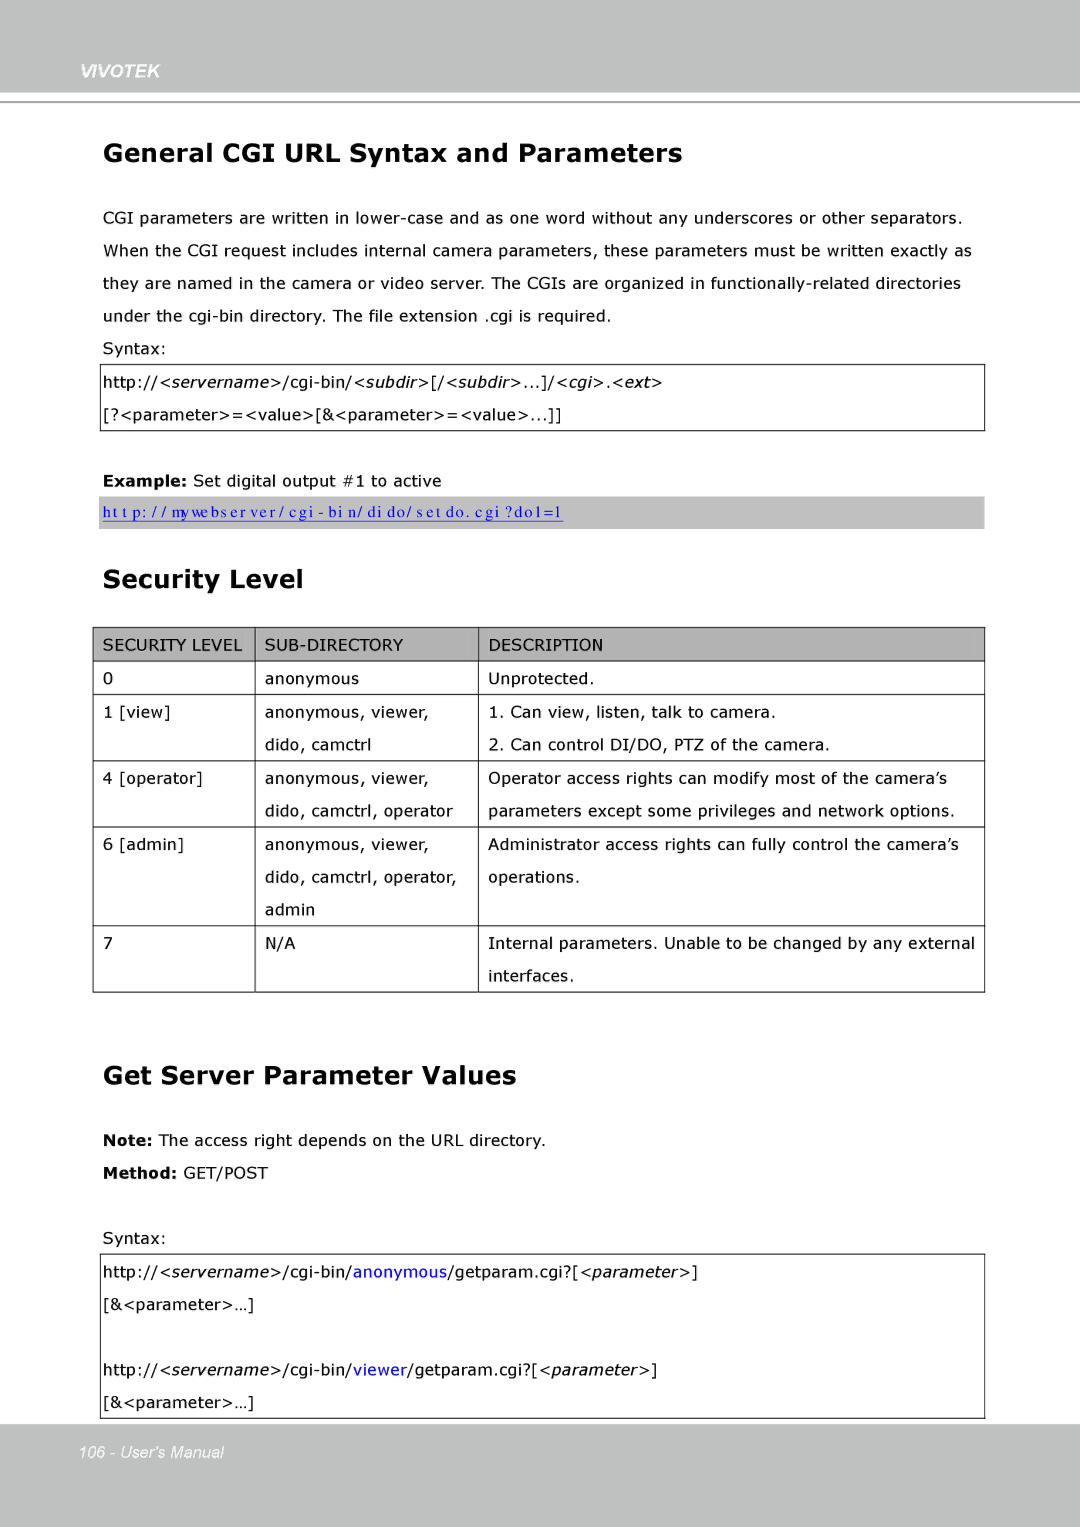 Vivotek FD8361L manual General CGI URL Syntax and Parameters, Security Level, Get Server Parameter Values 